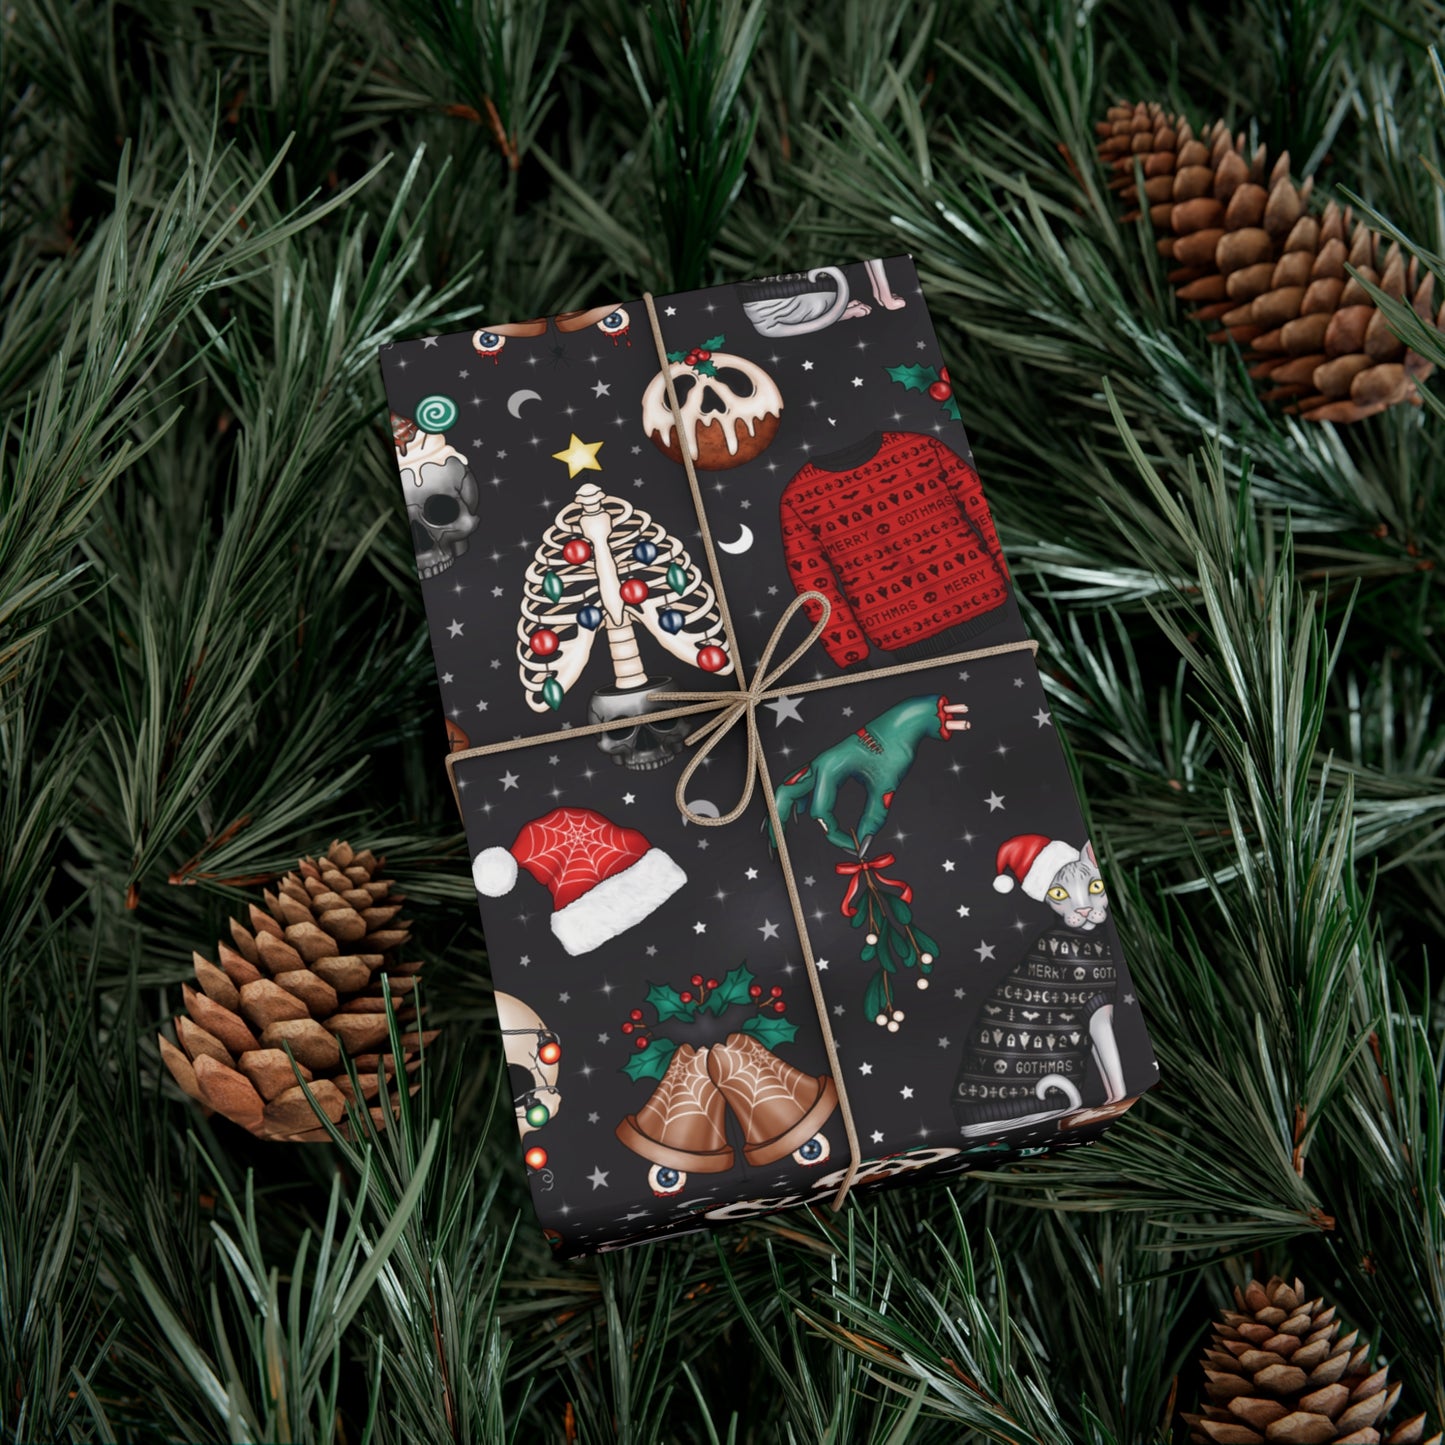 Kitschy Kawaii Goth Christmas, Creepy Cute Whimsigoth Creepmas Black Eco-Friendly Gift Wrap Paper